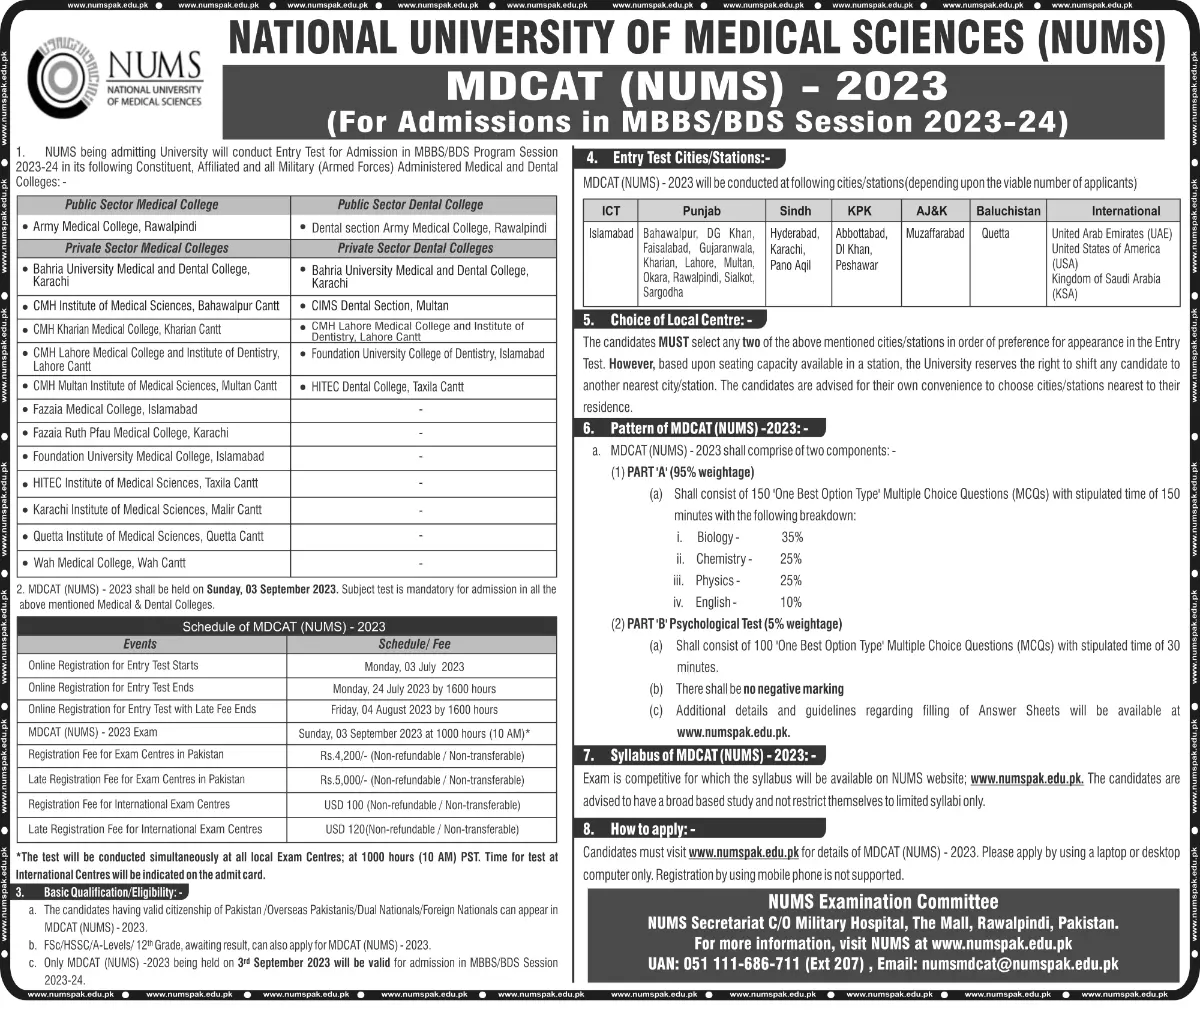 Army Medical College Admission 2023 Merit List Fee